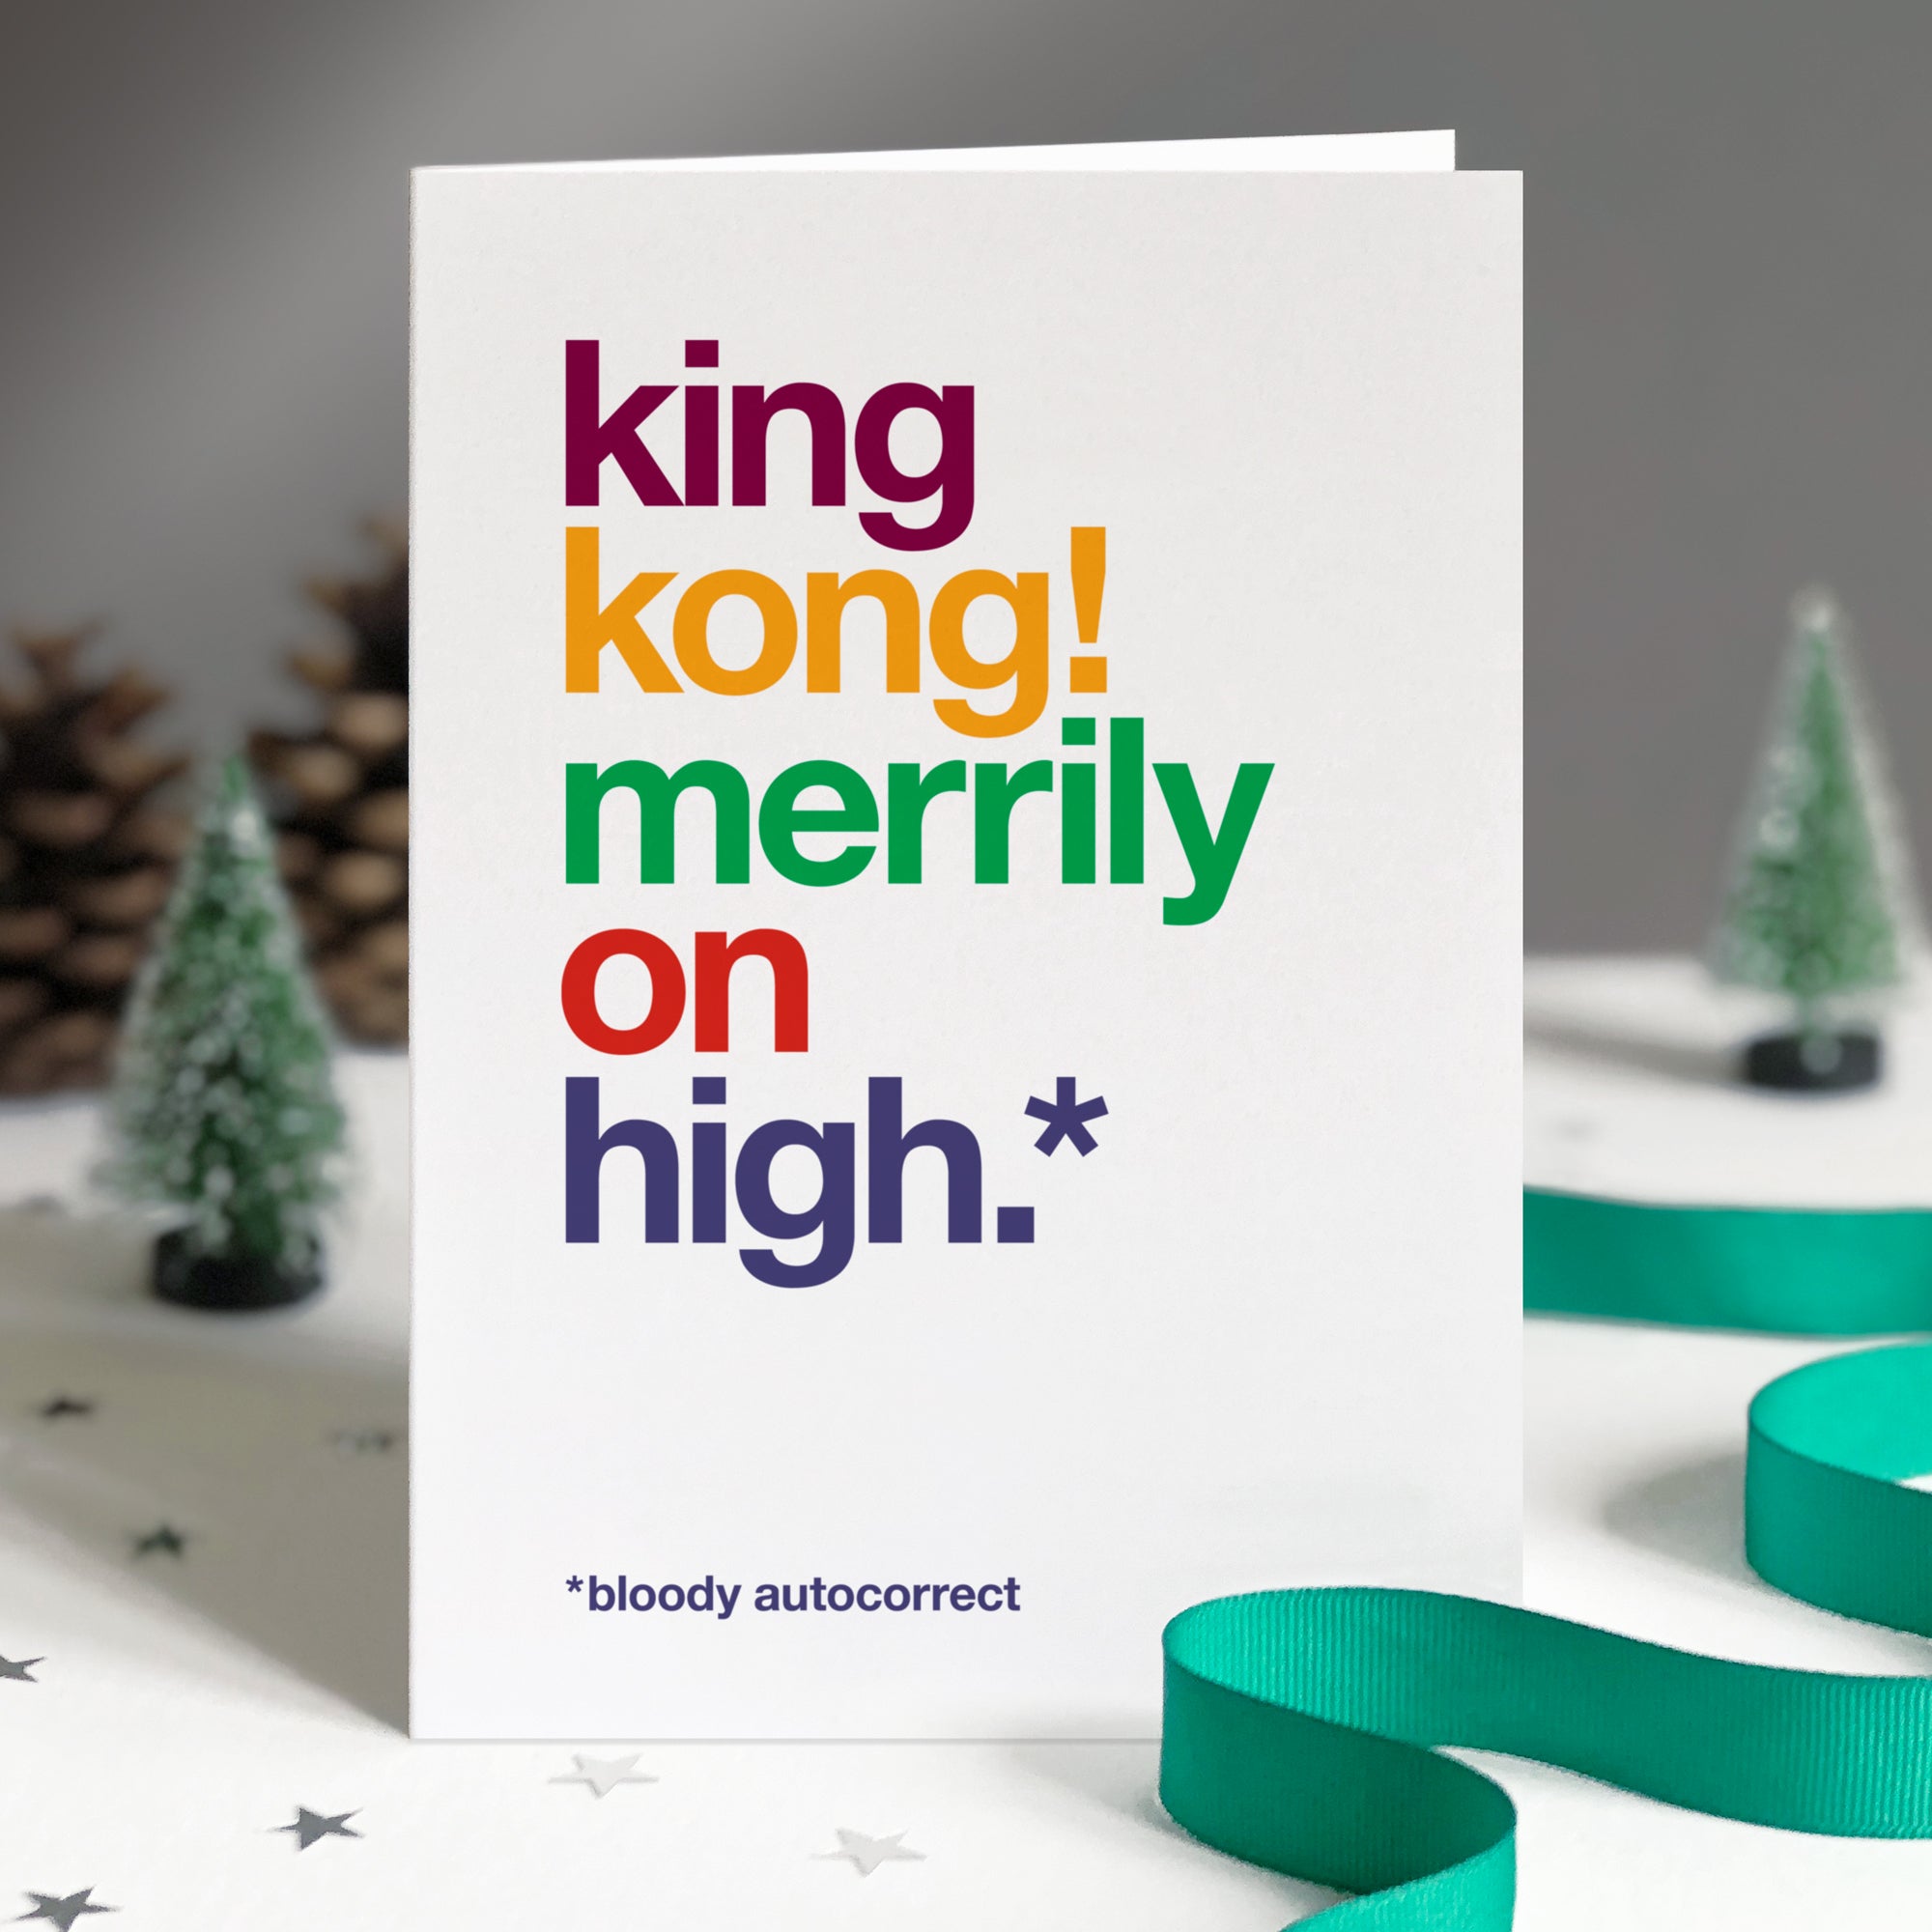 Funny christmas card autocorrected to 'king kong merrily on high'.